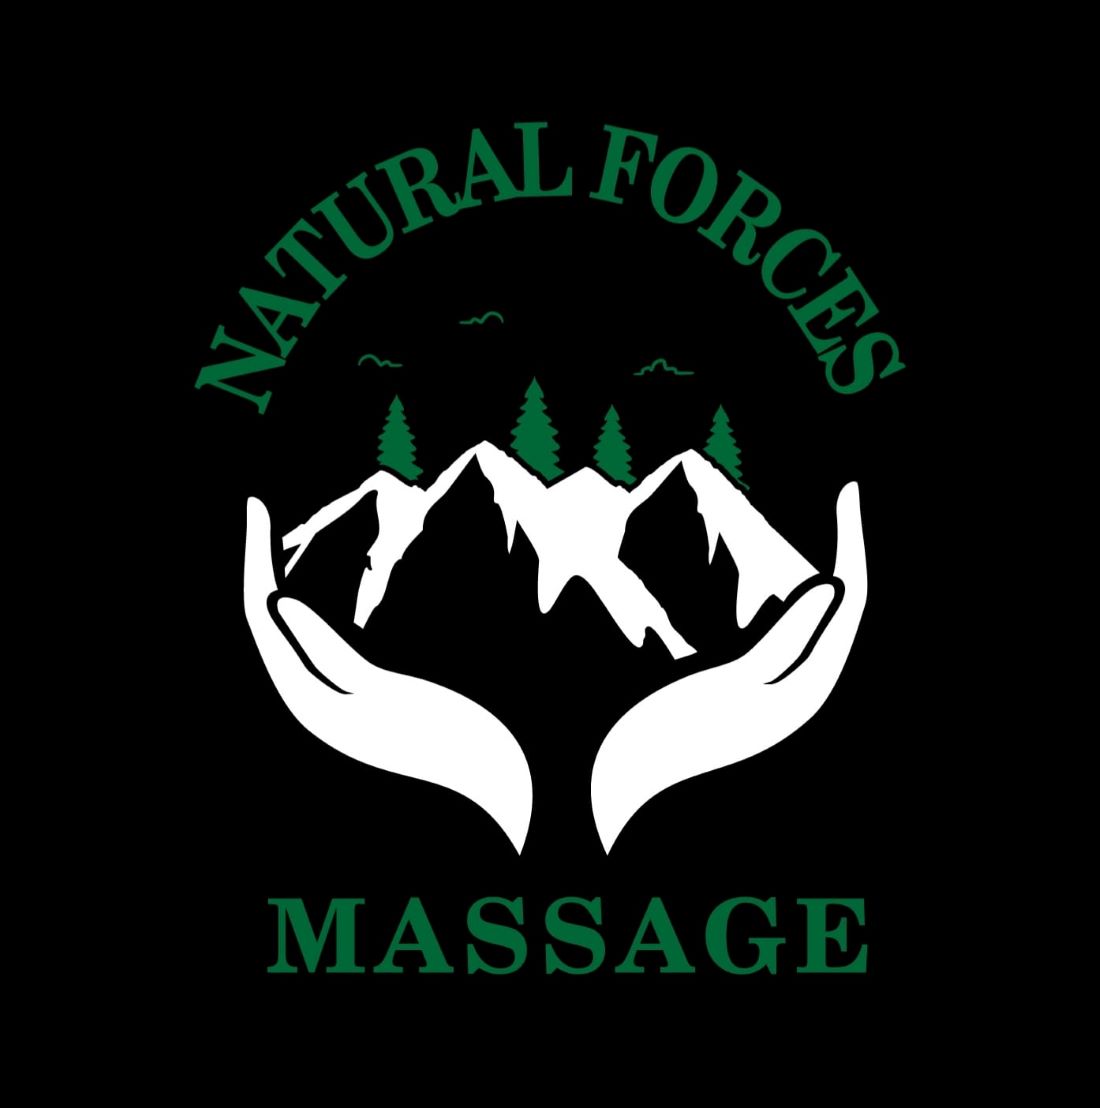 Natural Forces Massage